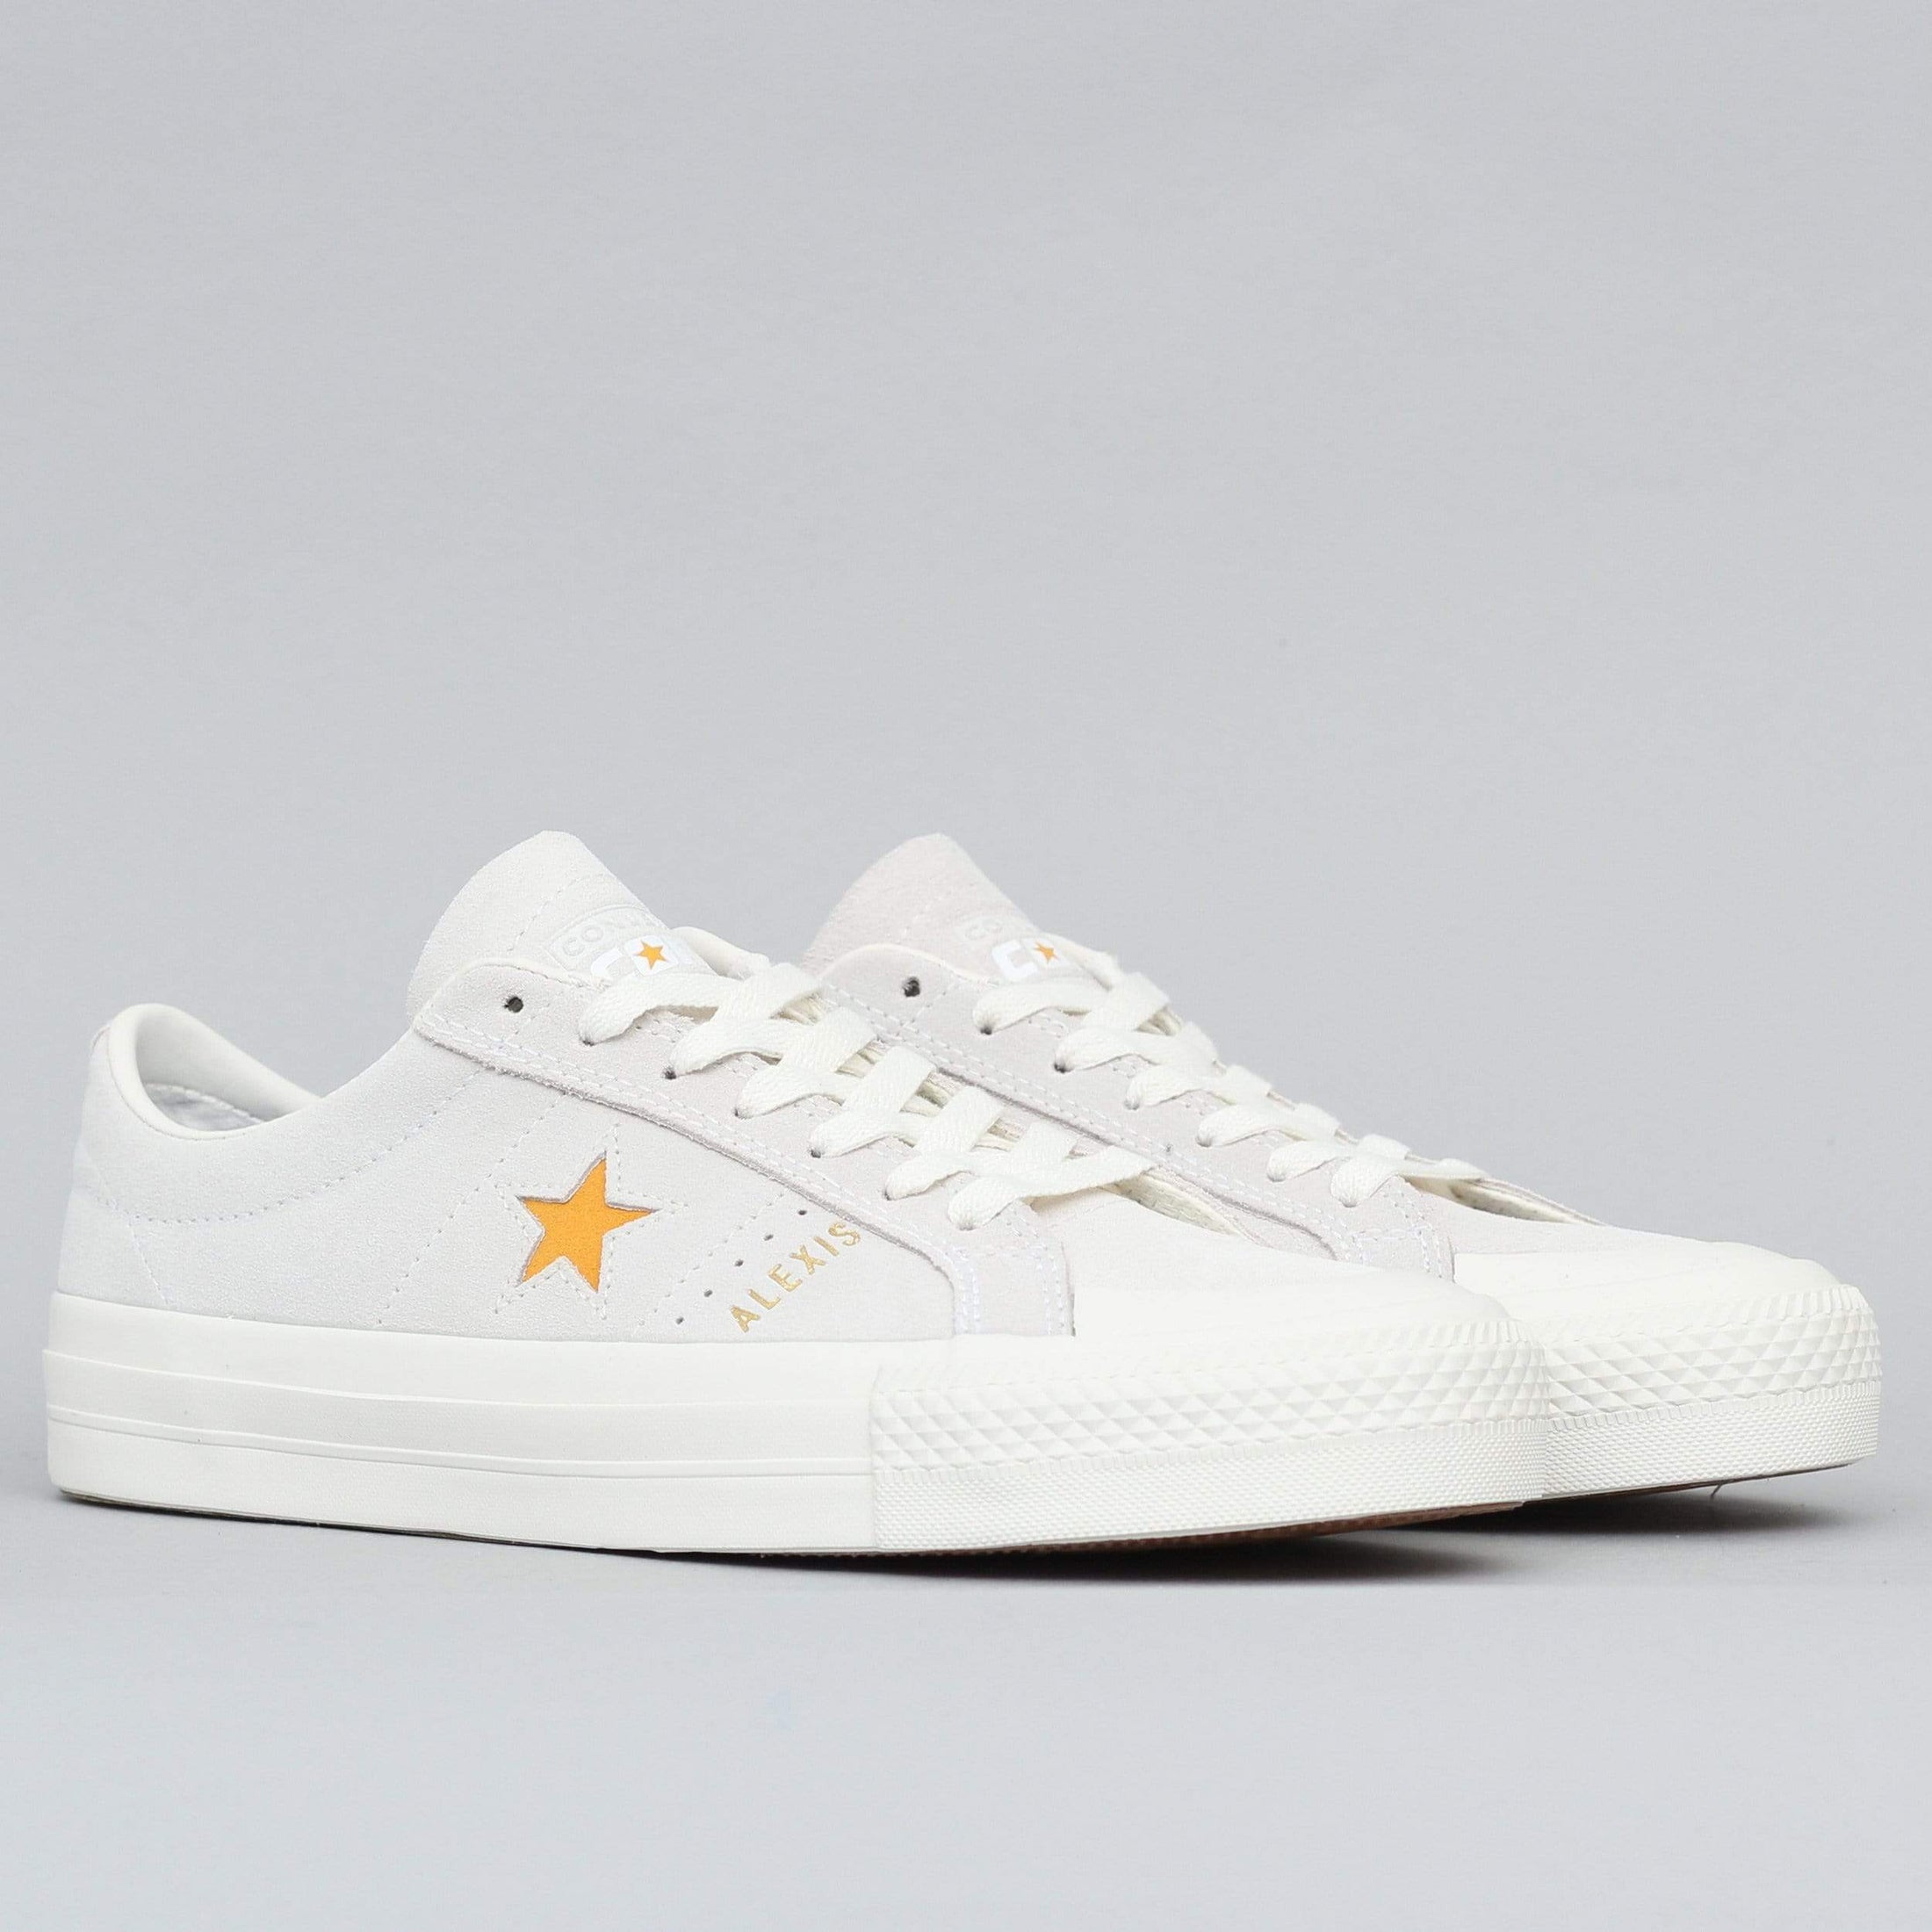 Converse Alexis Sablone One Star Pro Low Top Shoes White / Coast / University Gold